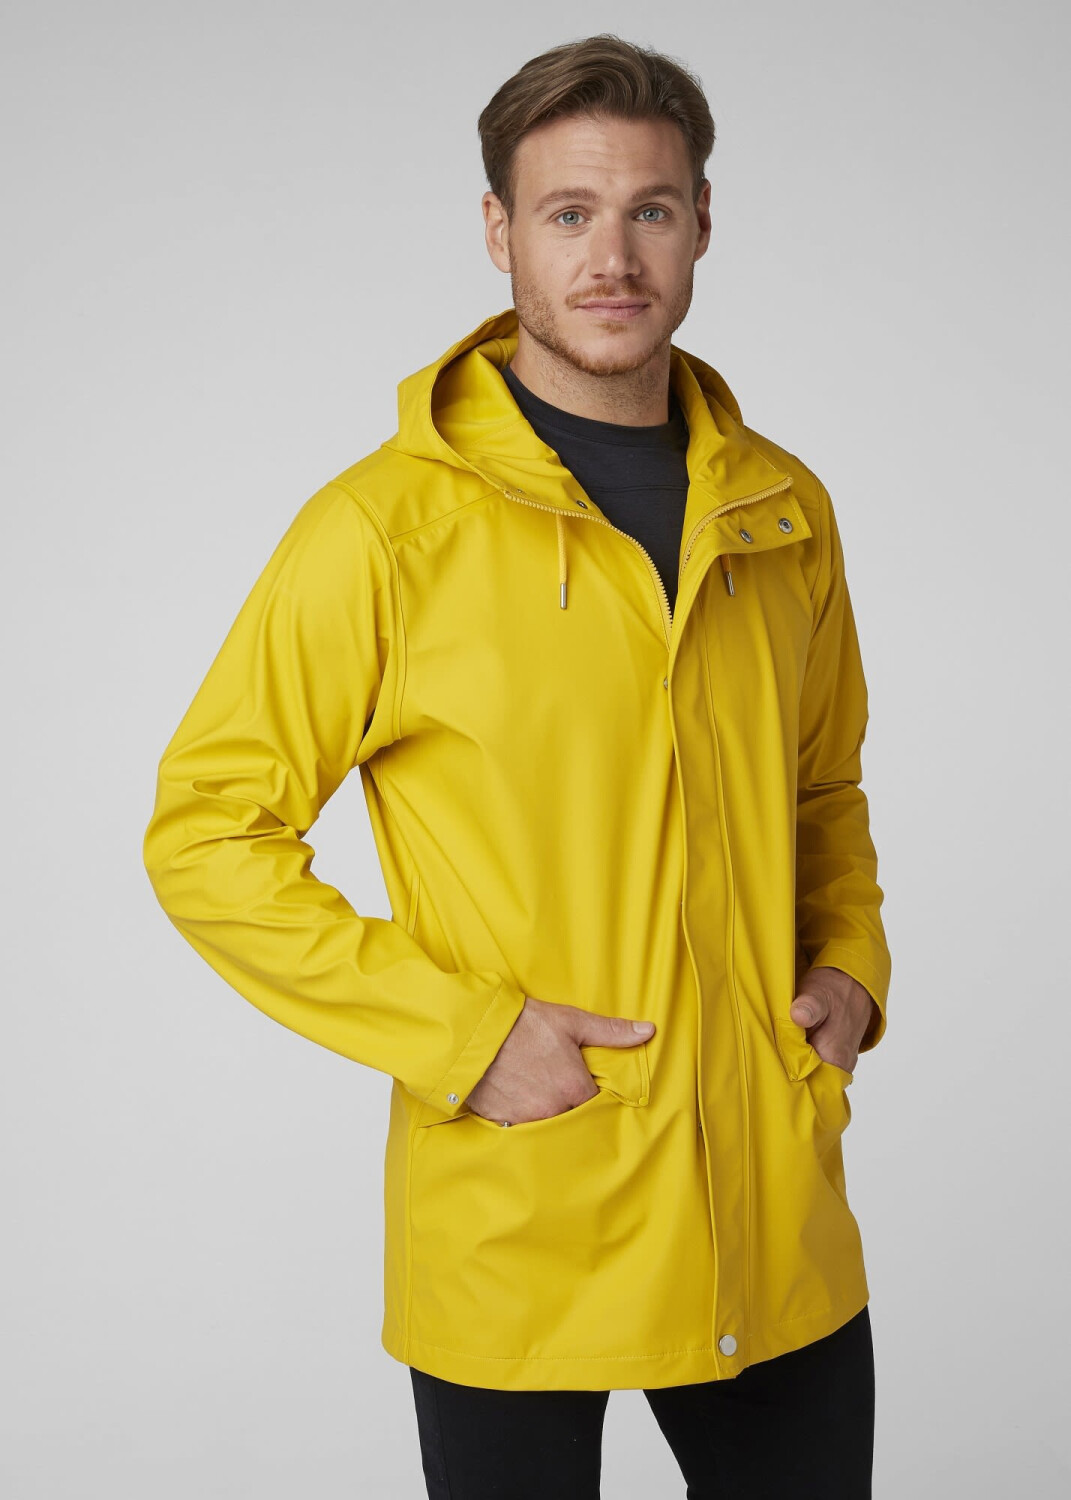 LANSHULAN Women Yellow Raincoat Jacket,Unisex Kids Clear EVA Rain Coat  Costume